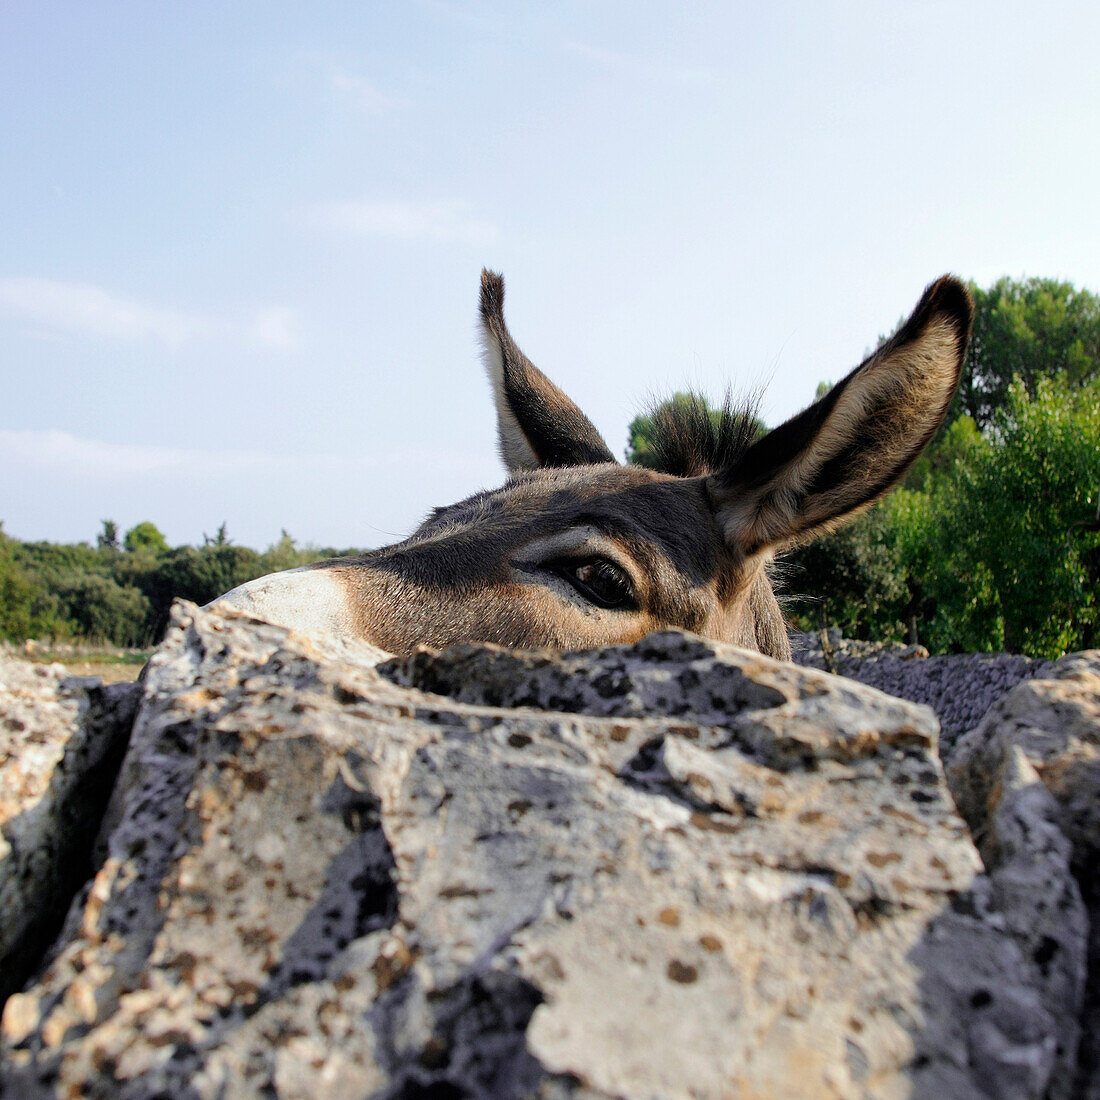 Donkey peering over stone wall